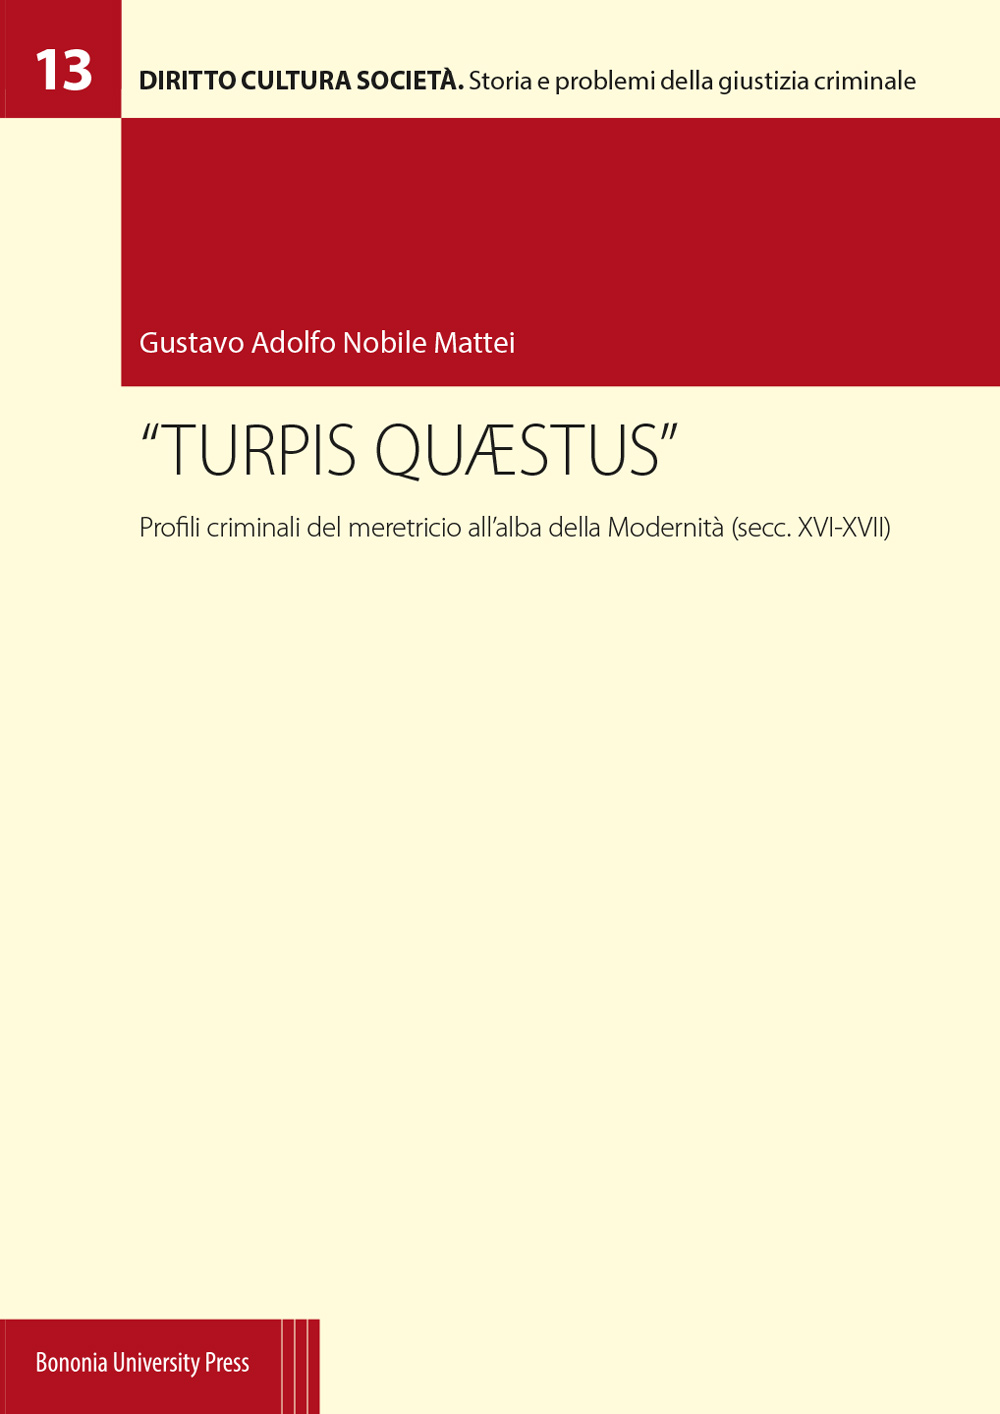 Turpis quaestus - Bologna University Press